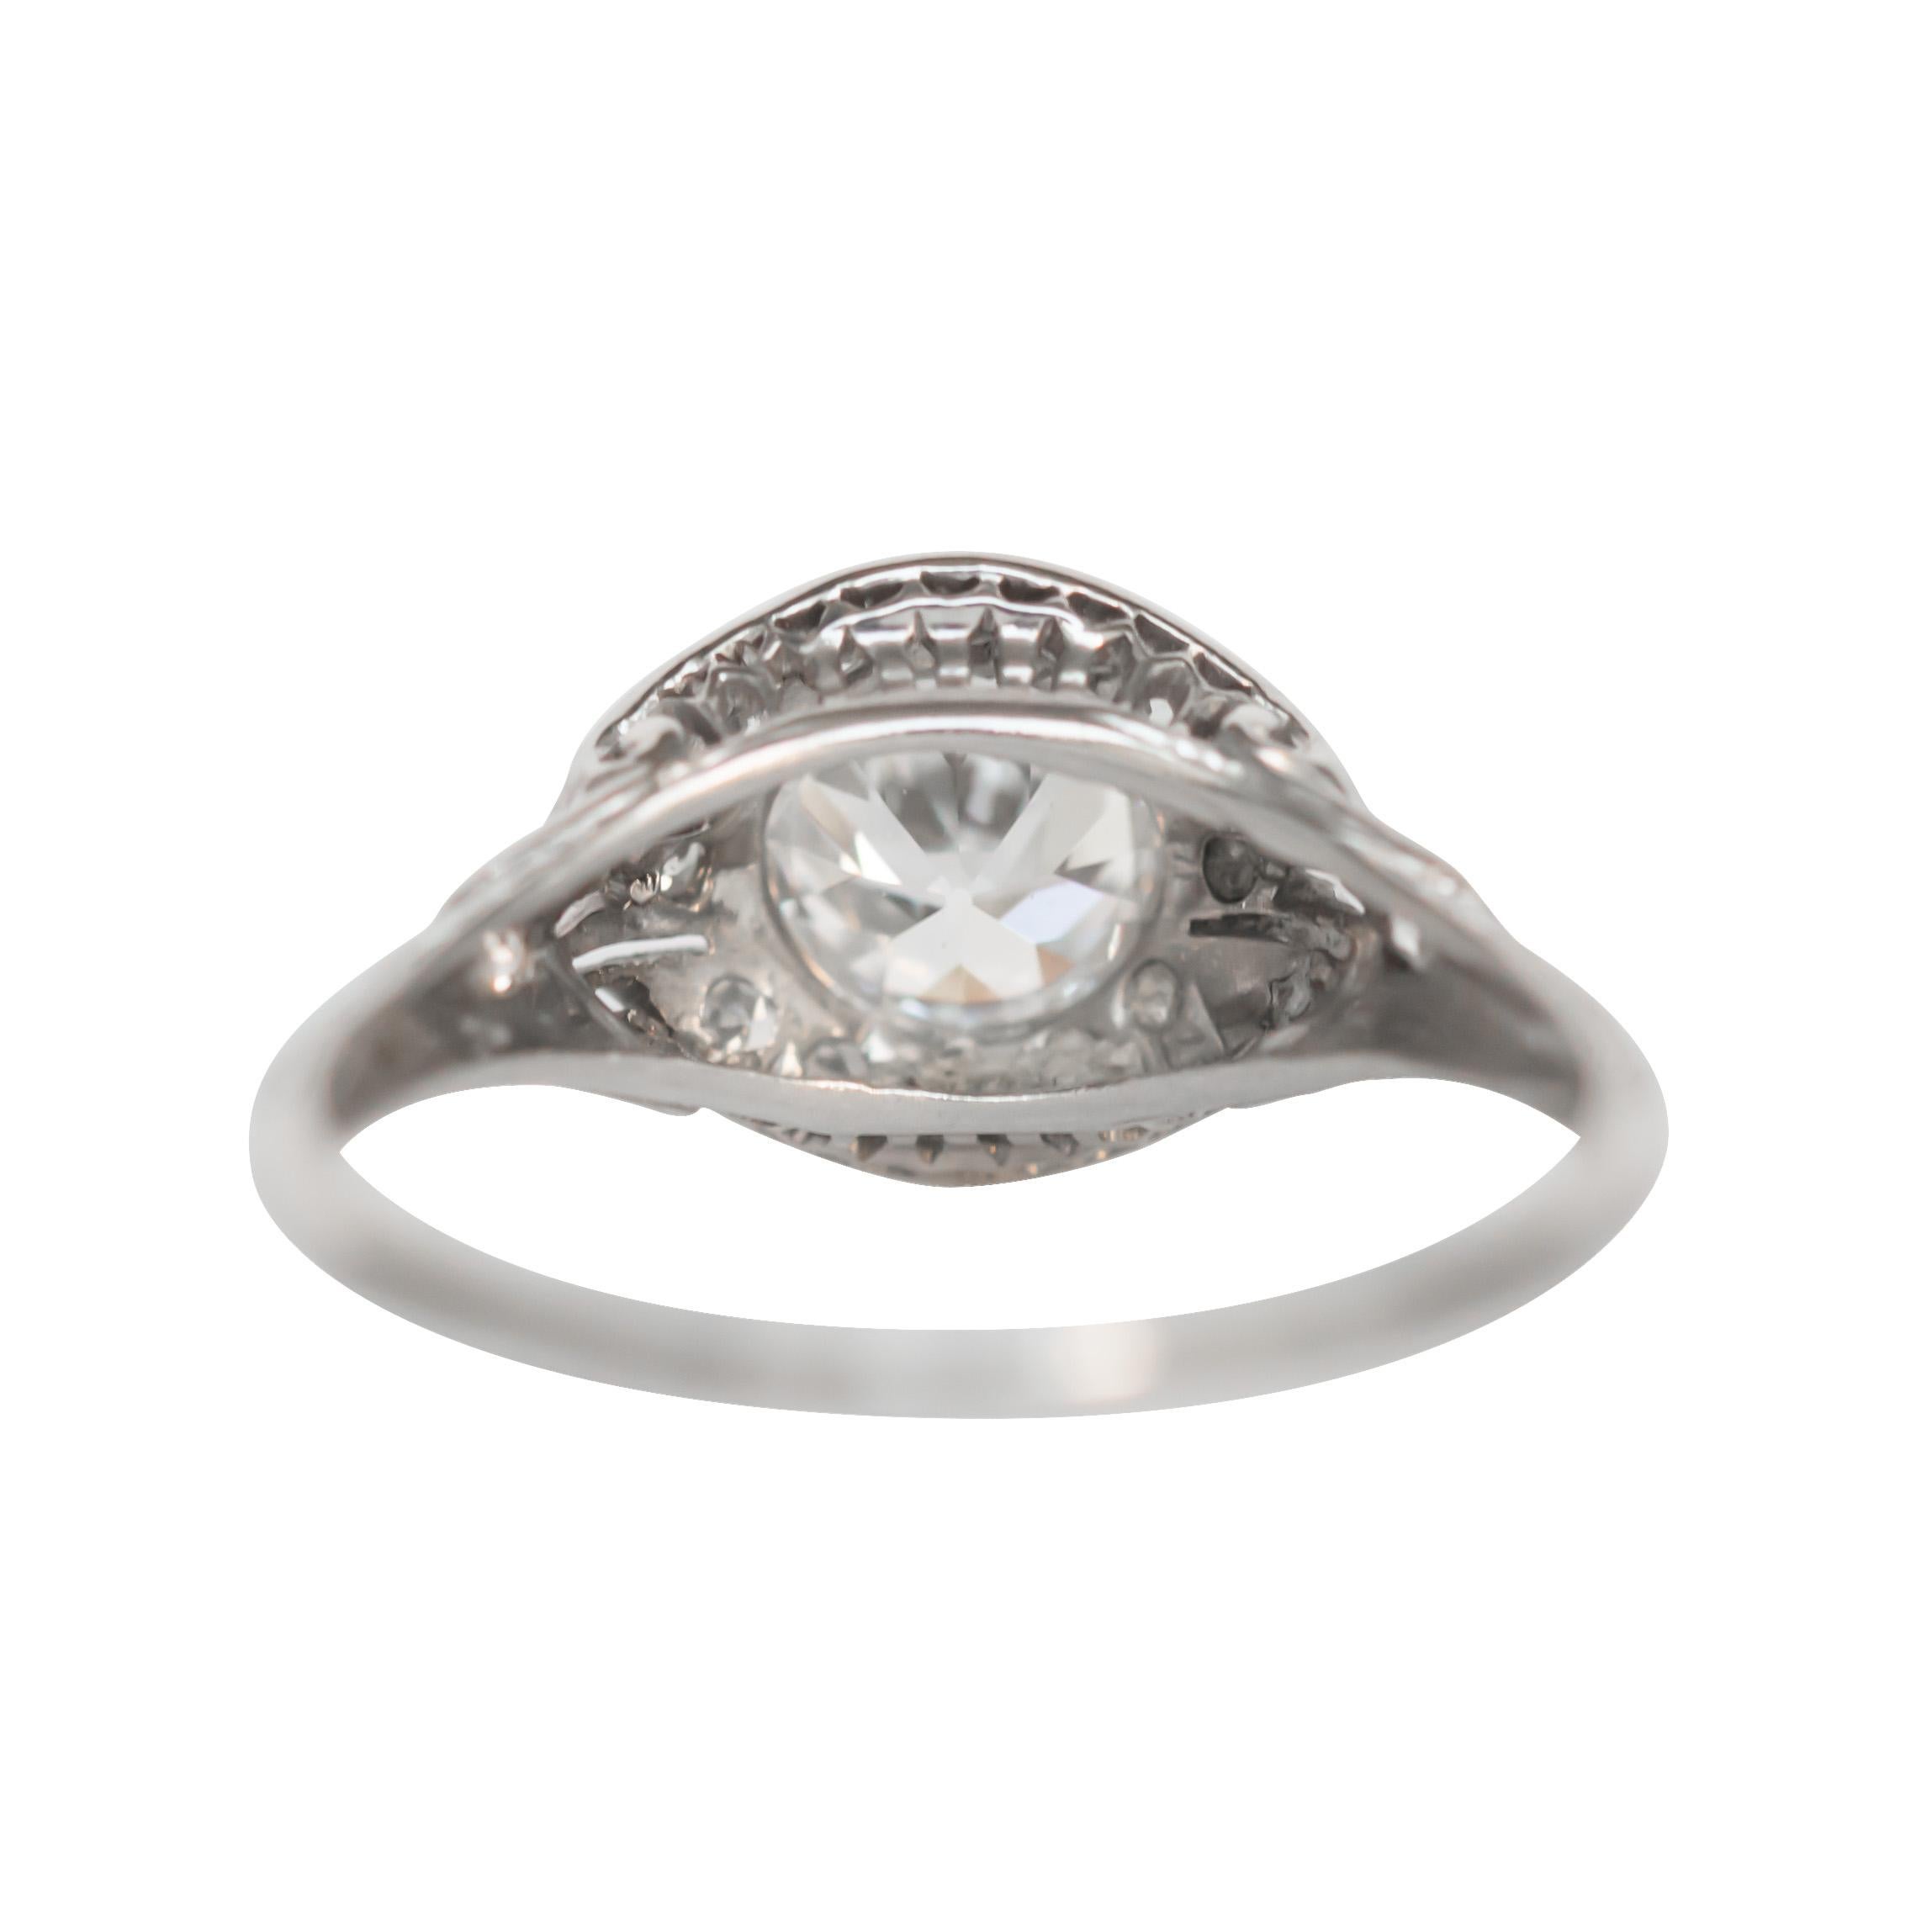 Antique Cushion Cut GIA Certified 1.01 Carat Diamond Platinum Engagement Ring For Sale